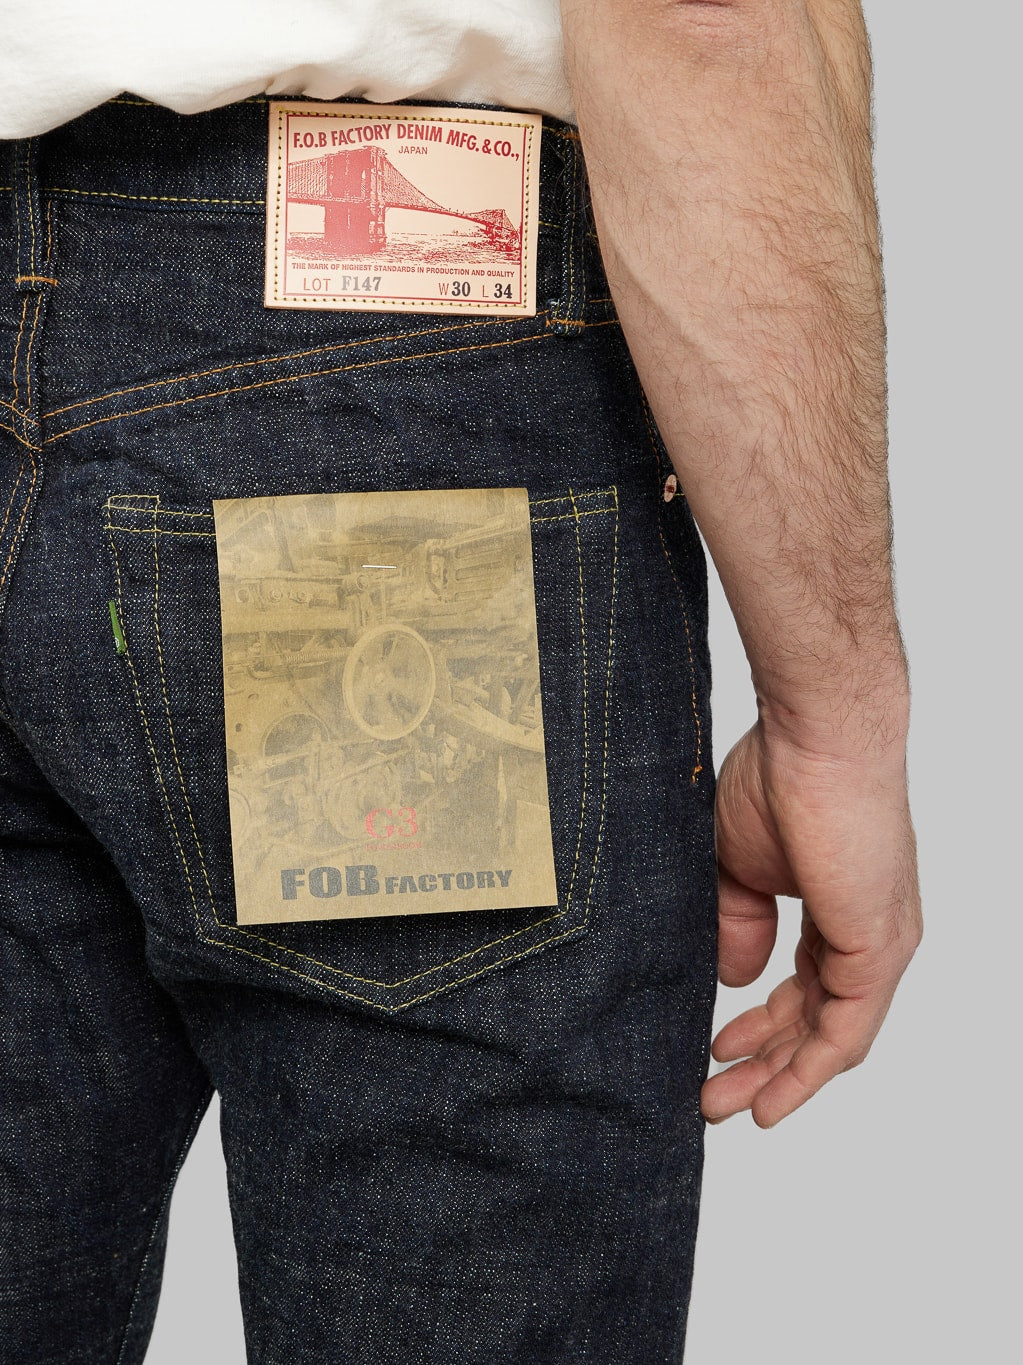 Fob factory slim straight jean back pocket flasher